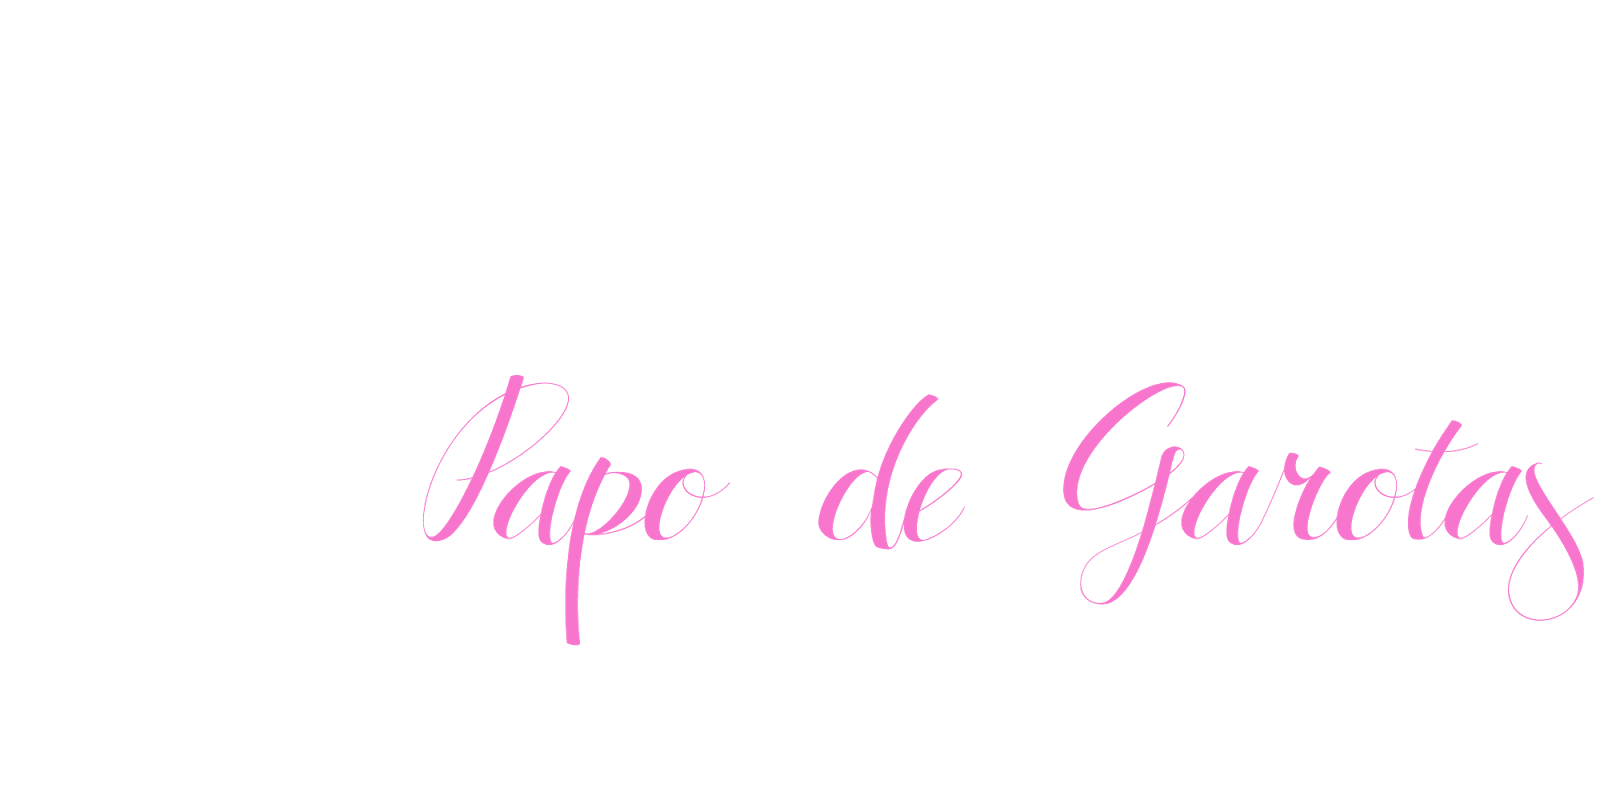 Próximo layout do blog Papo de Garotas